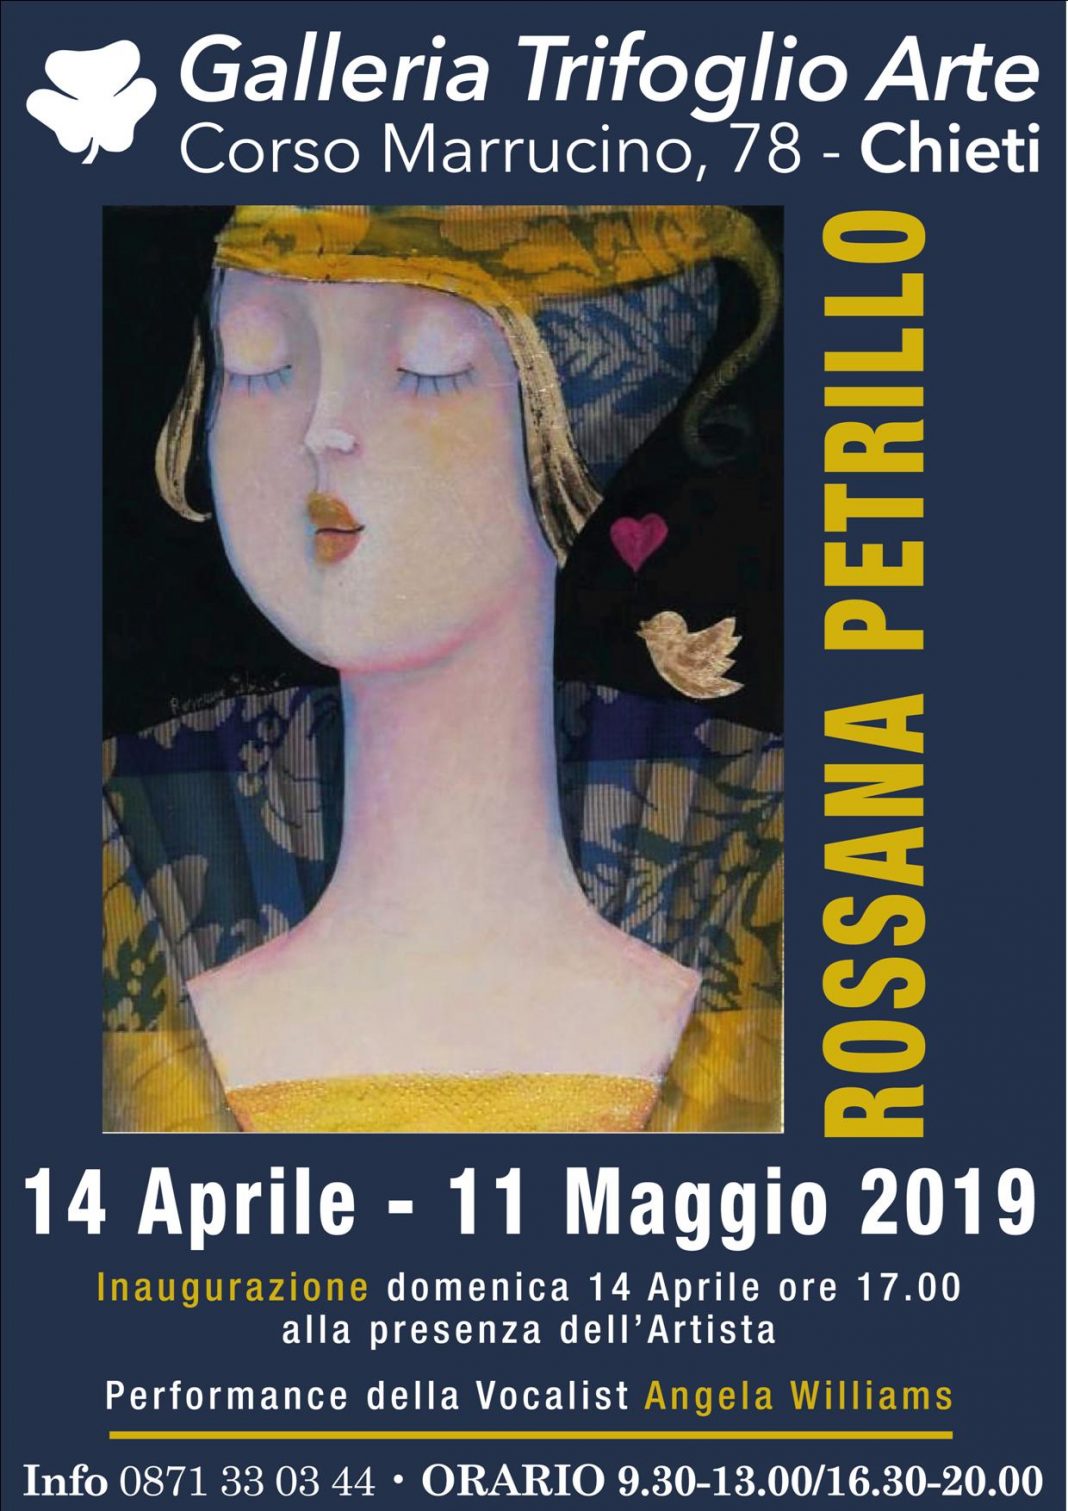 Rossana Petrillo – Empatiahttps://www.exibart.com/repository/media/eventi/2019/04/rossana-petrillo-8211-empatia-2-1068x1511.jpg